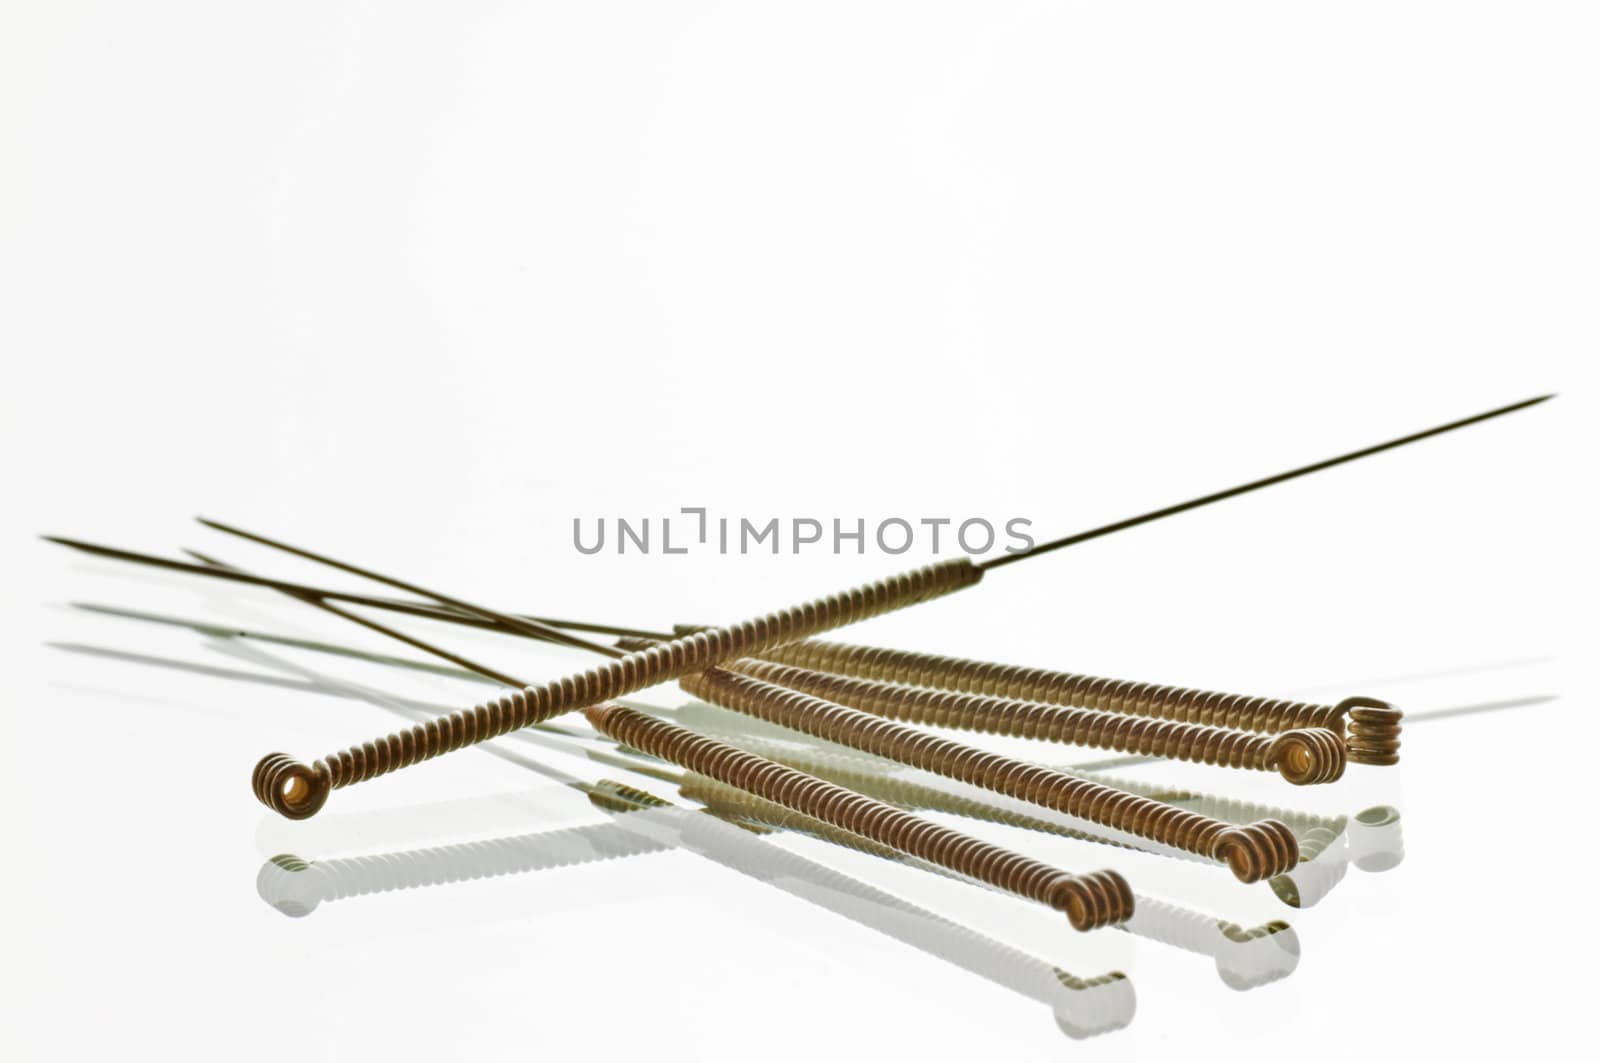 acupuncture needles by Jochen